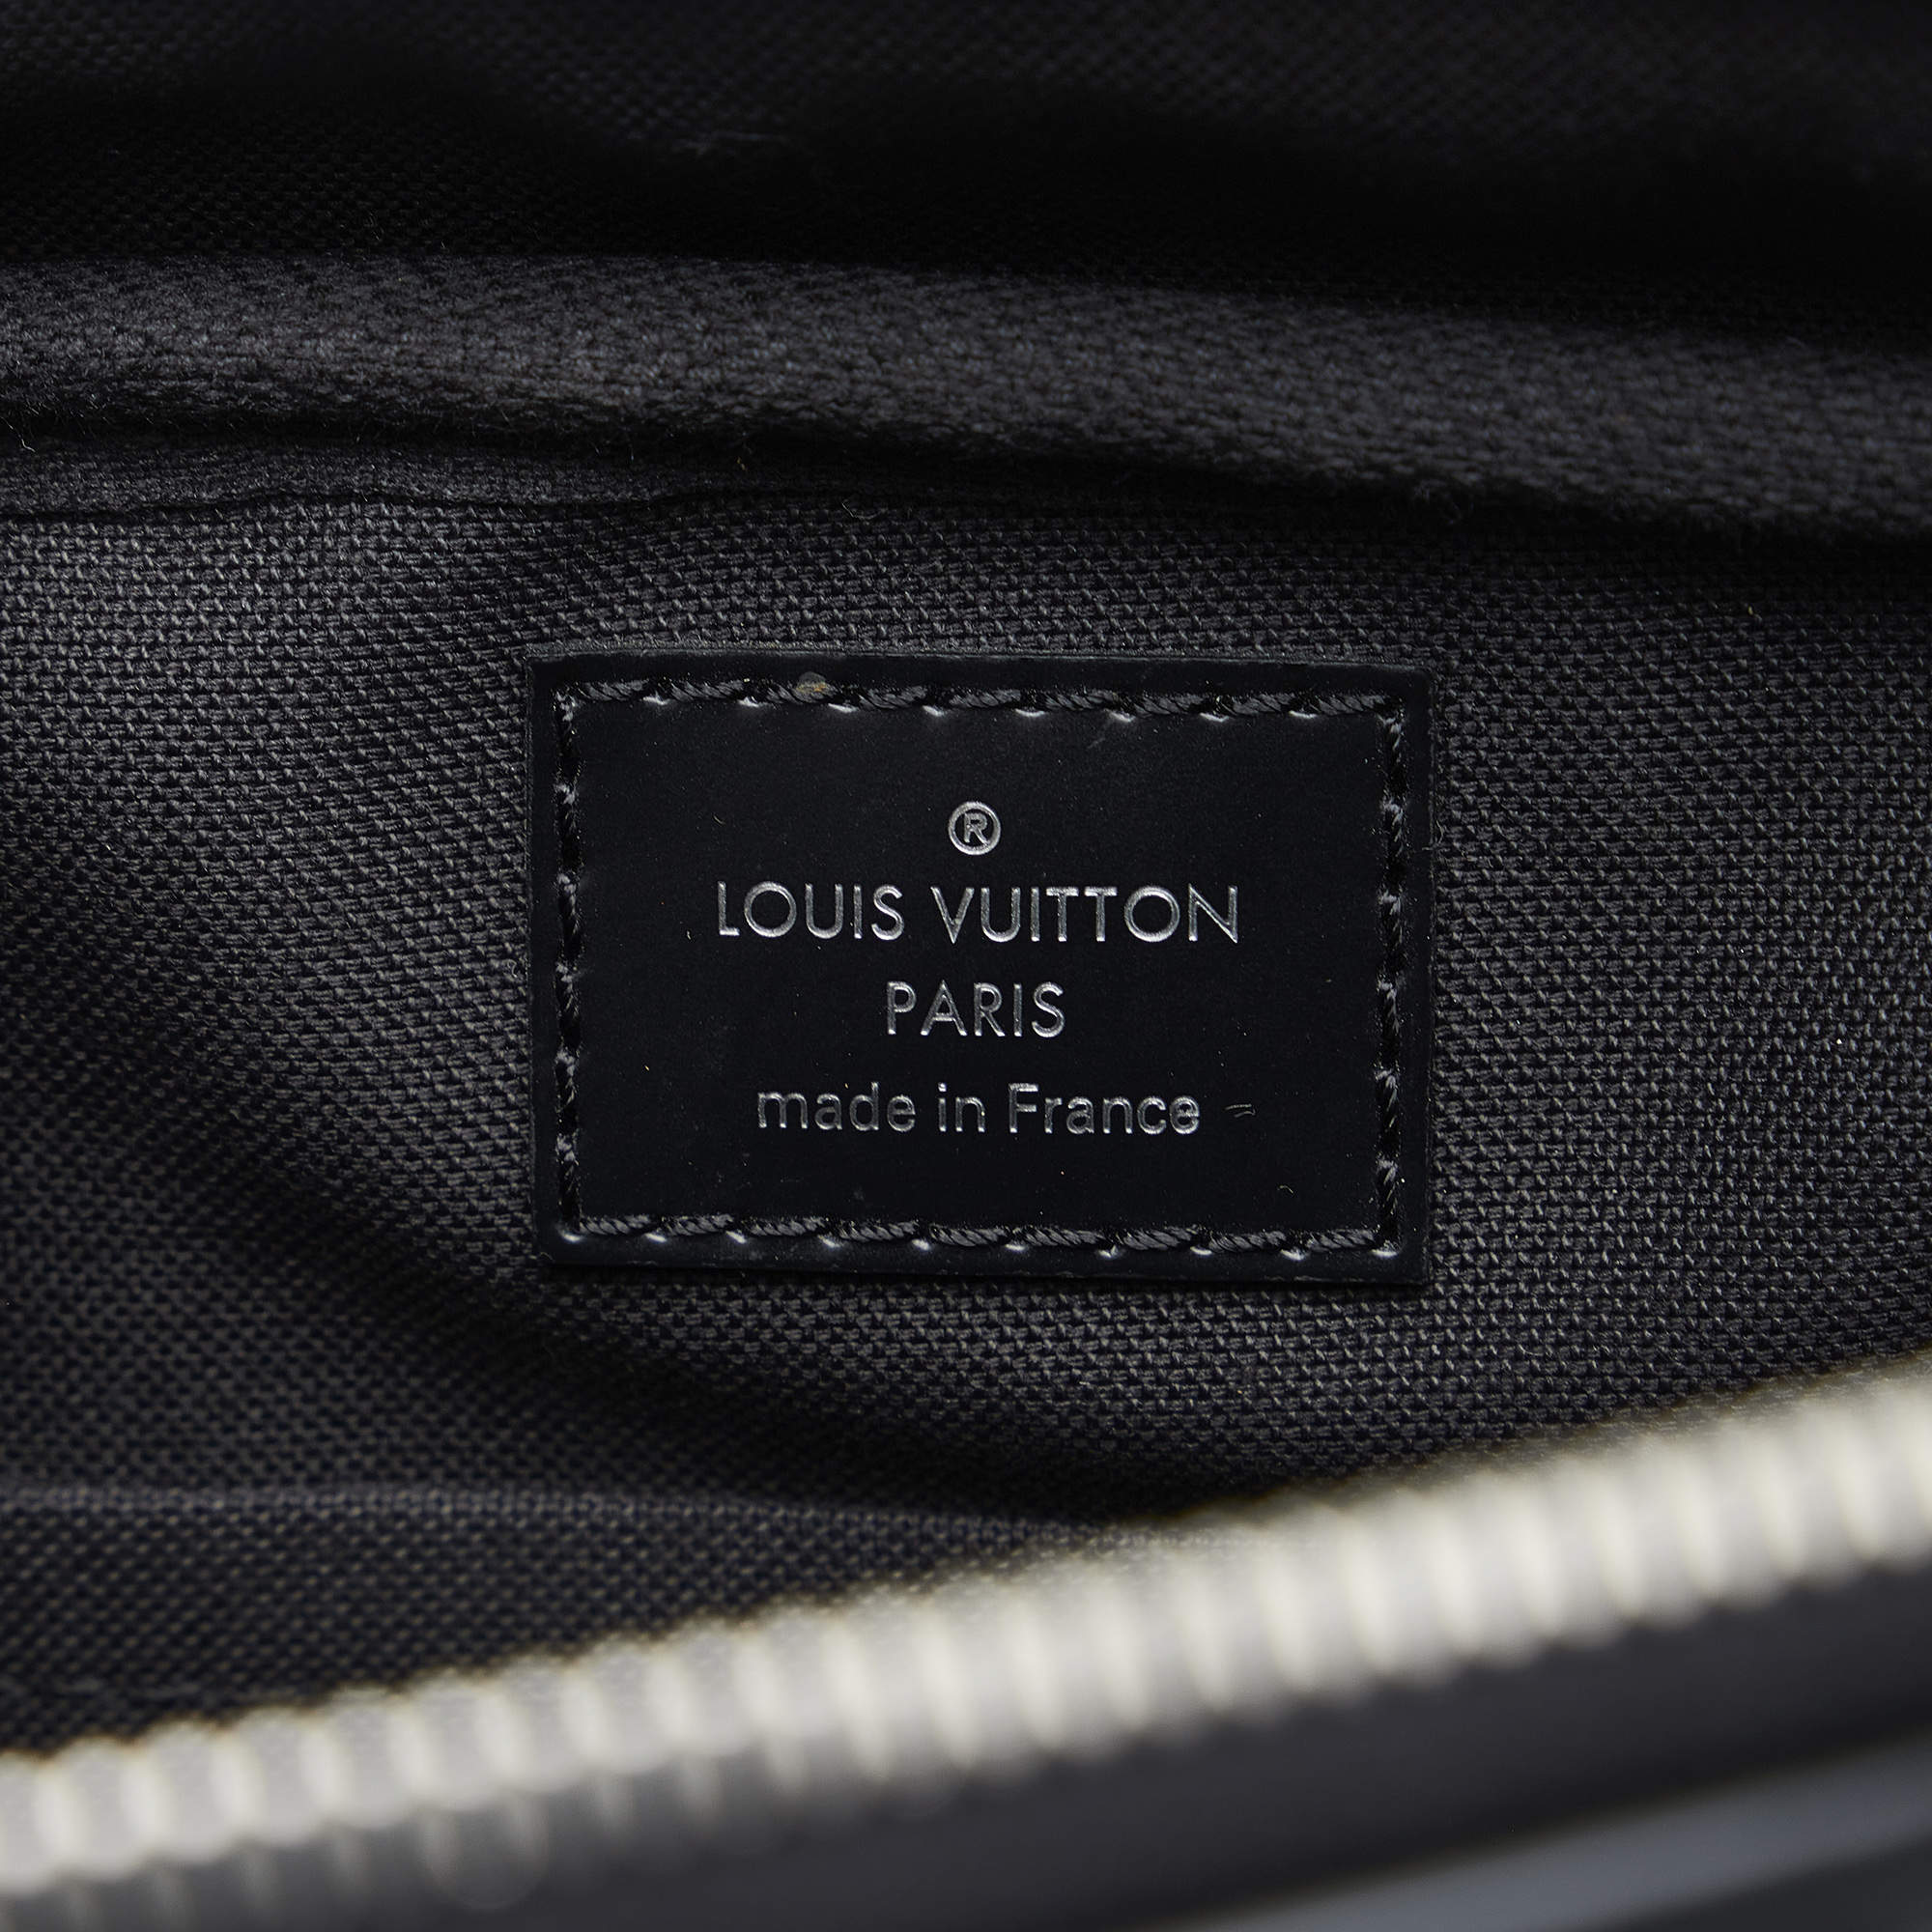 Sac Louis Vuitton Ambler Gris